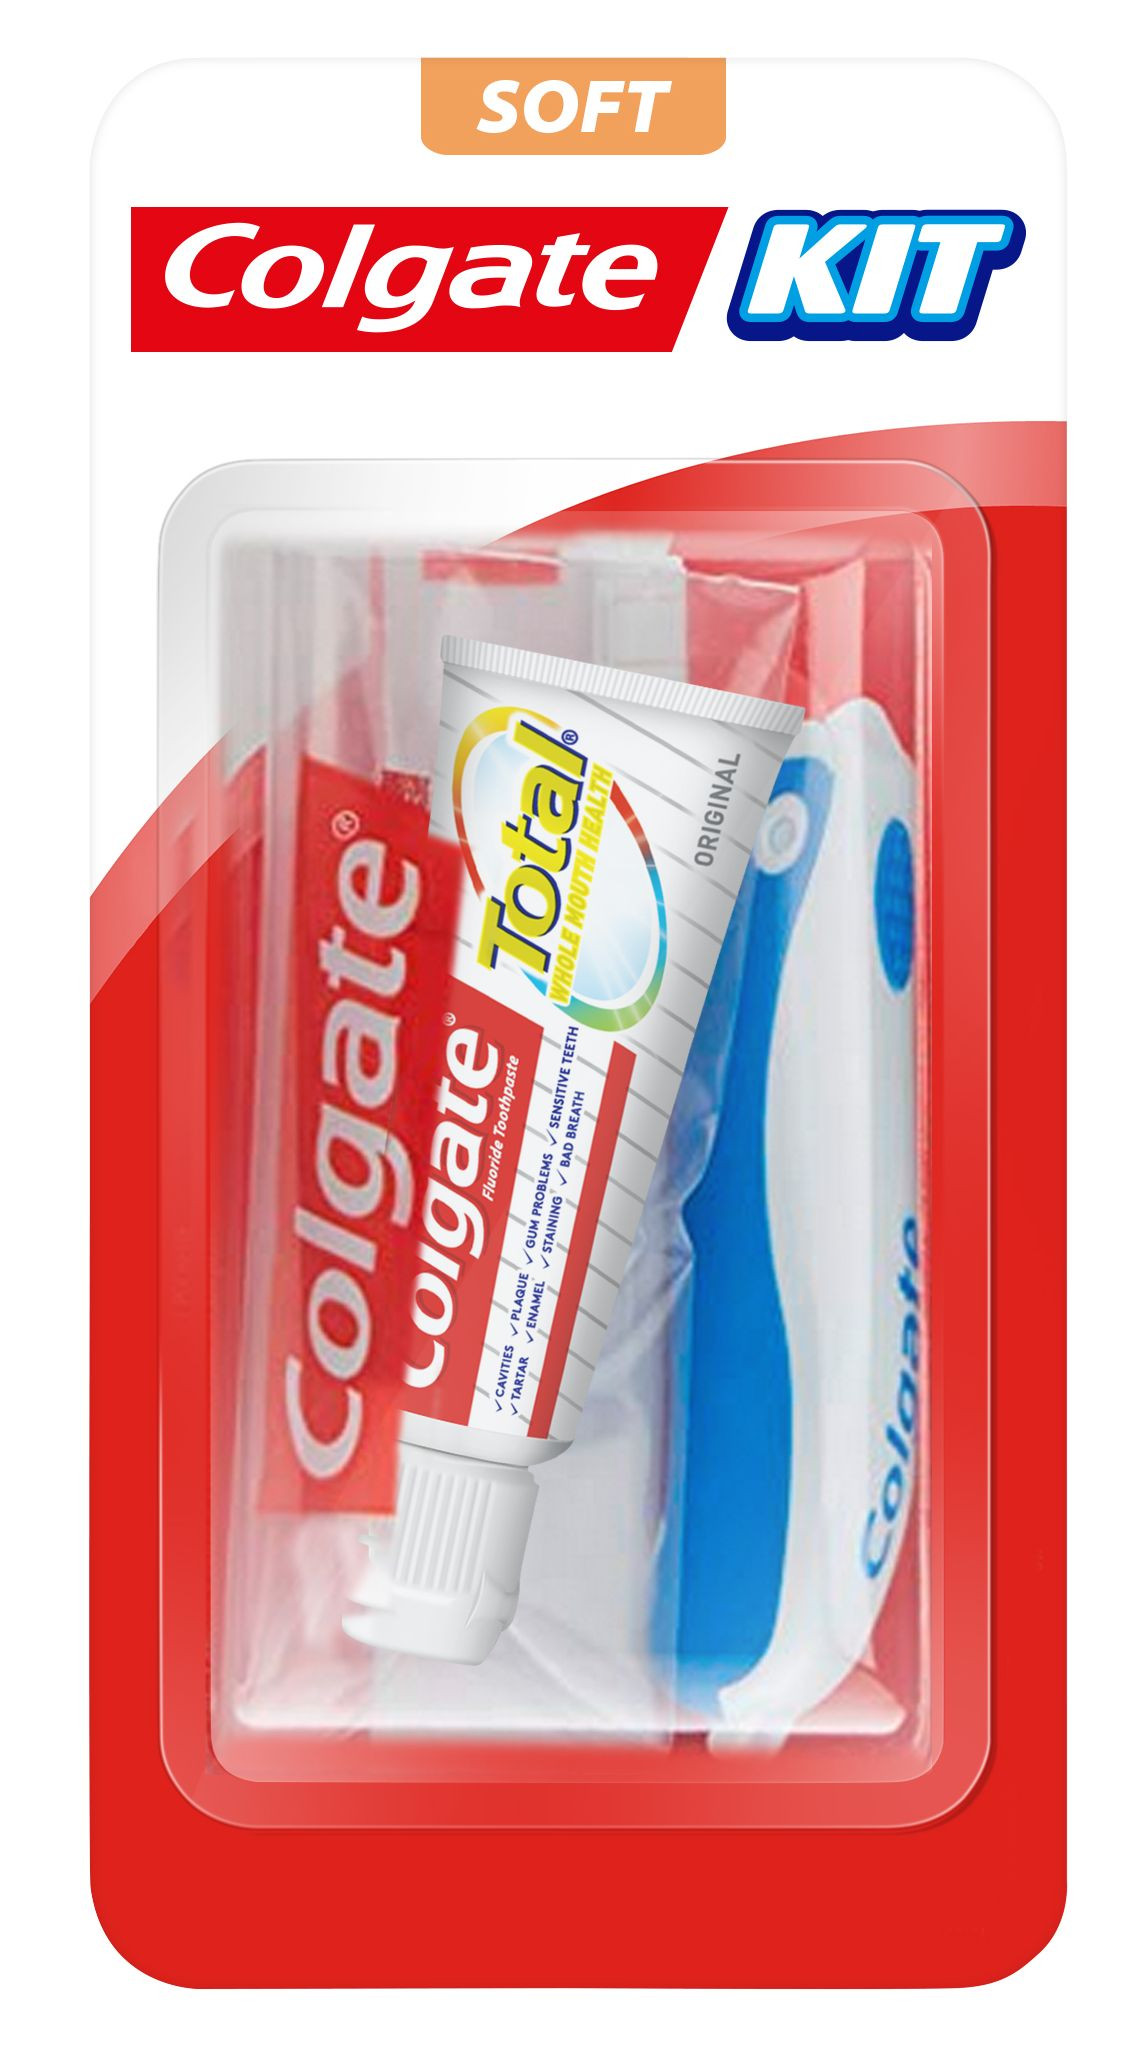 Gum Travel Kit Voyage Brosse A Dents + Fil Et Dentifrice Original White